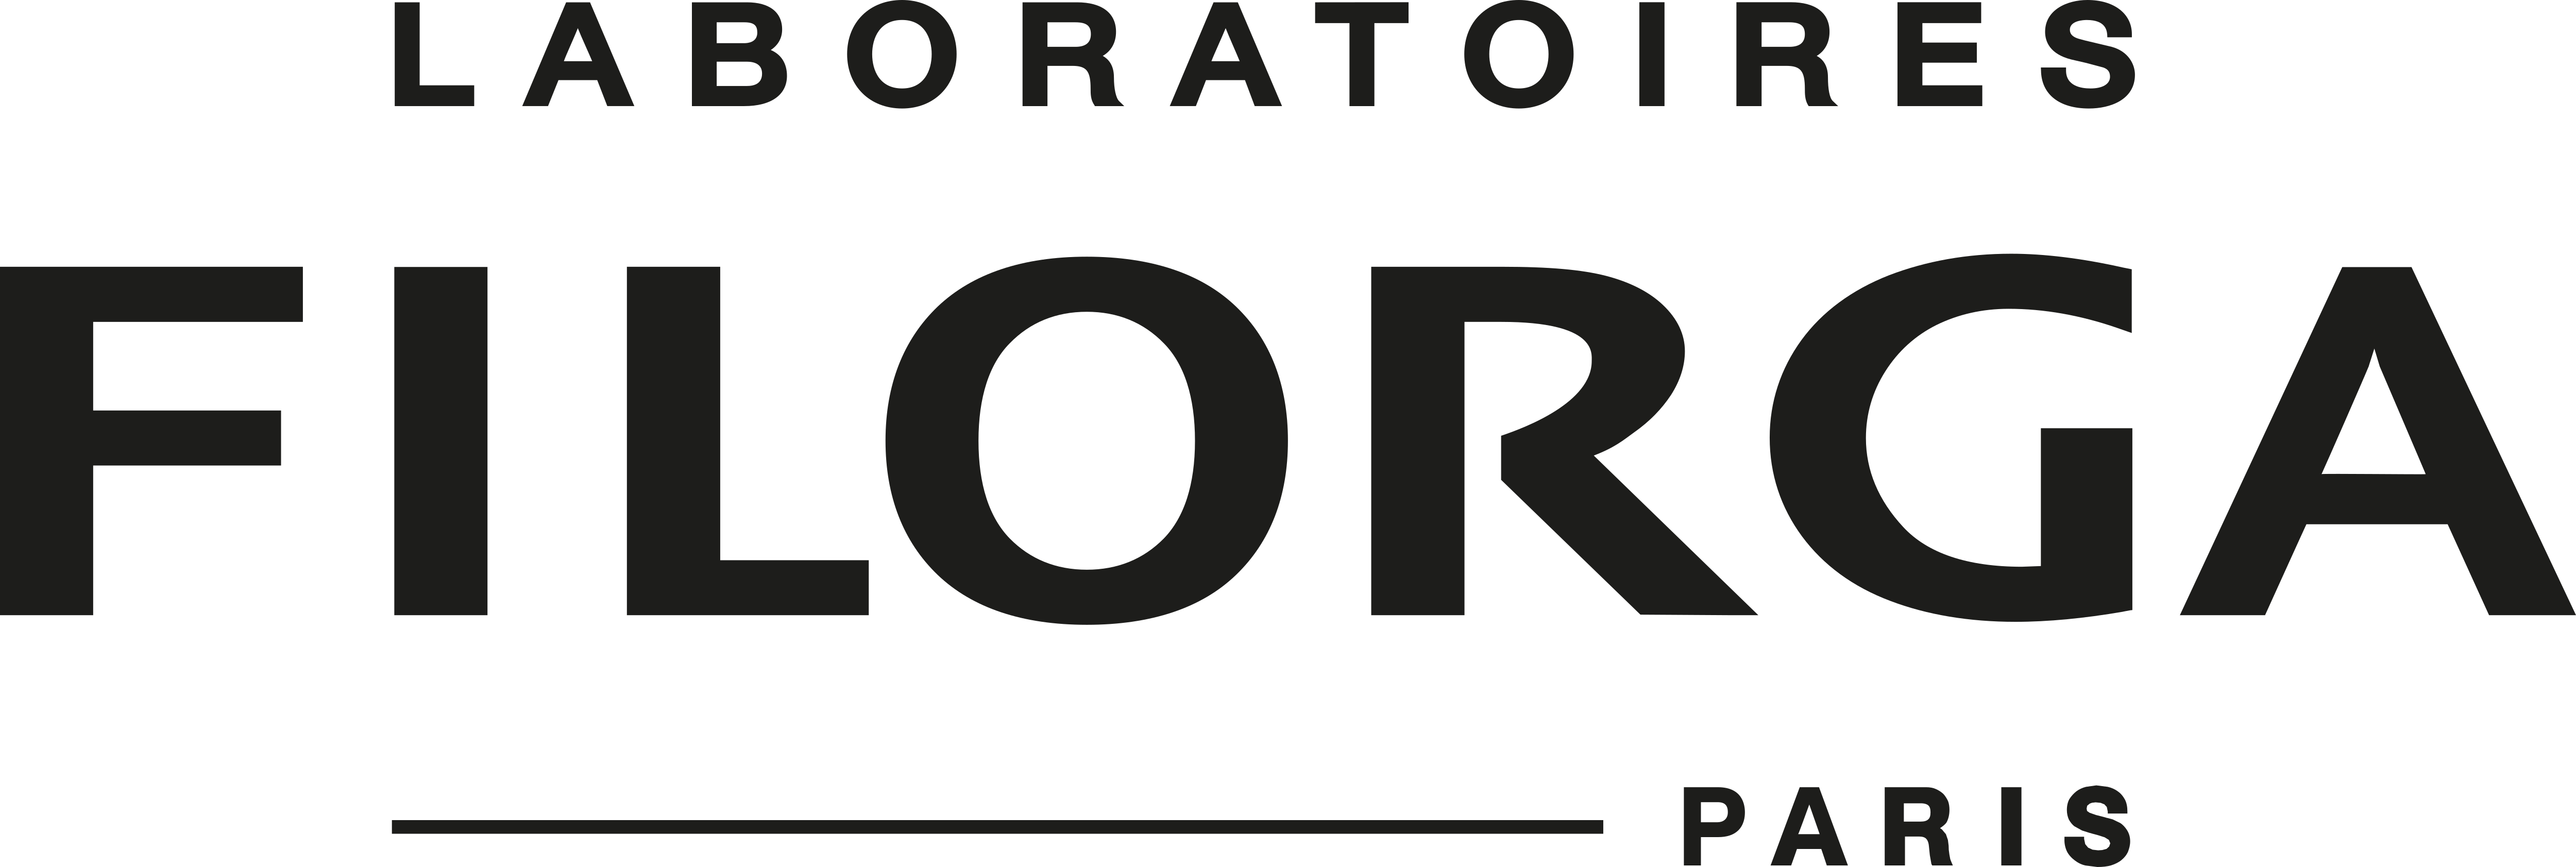 Filorga_Logo